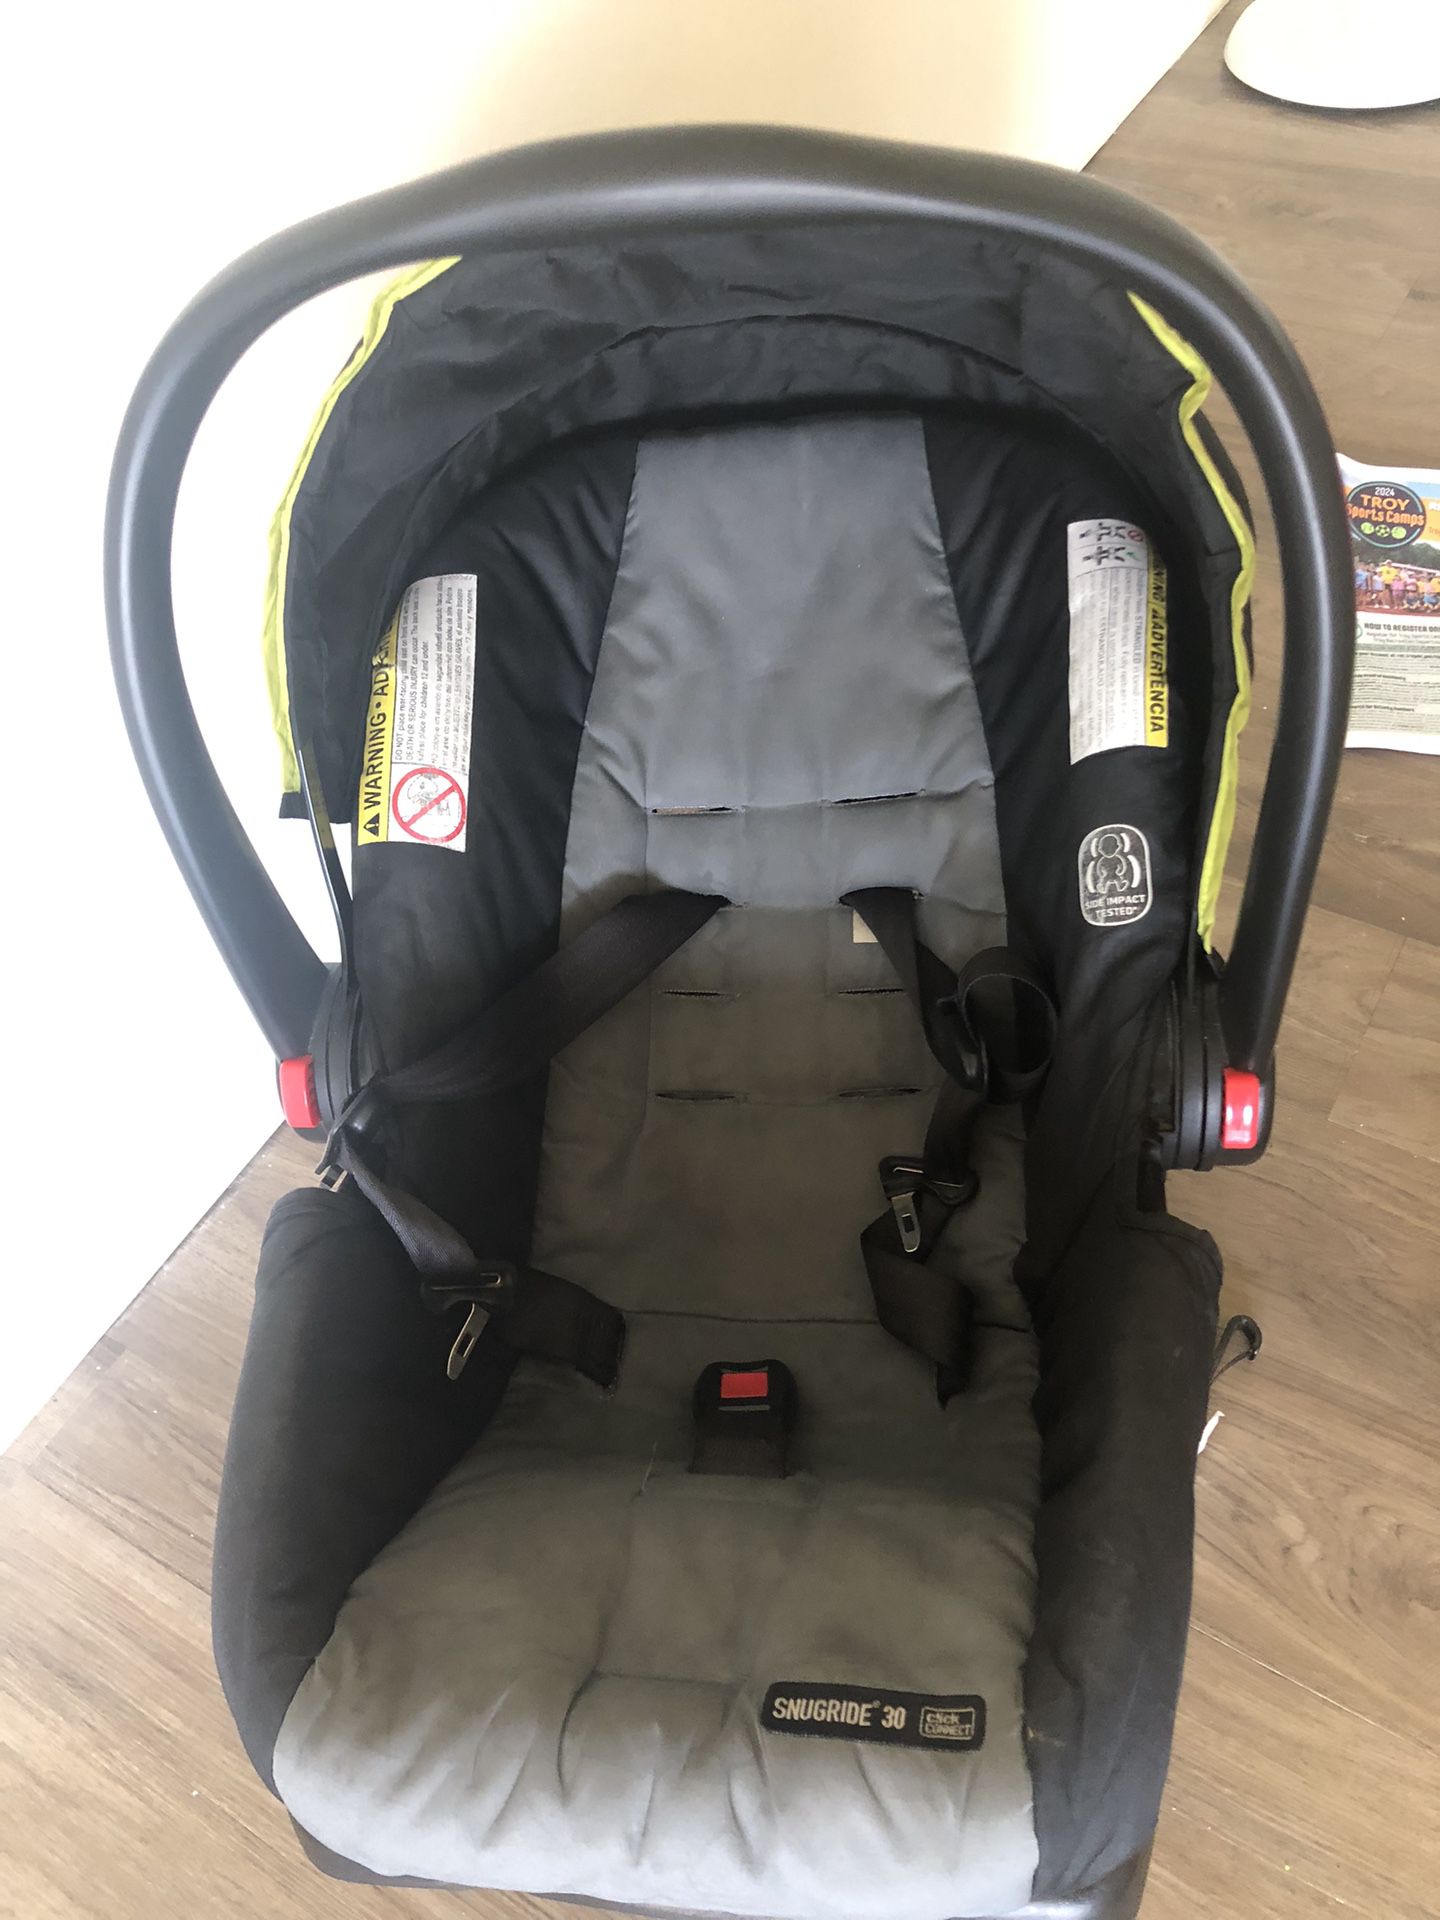 Rear Facing Infant Car Seat 